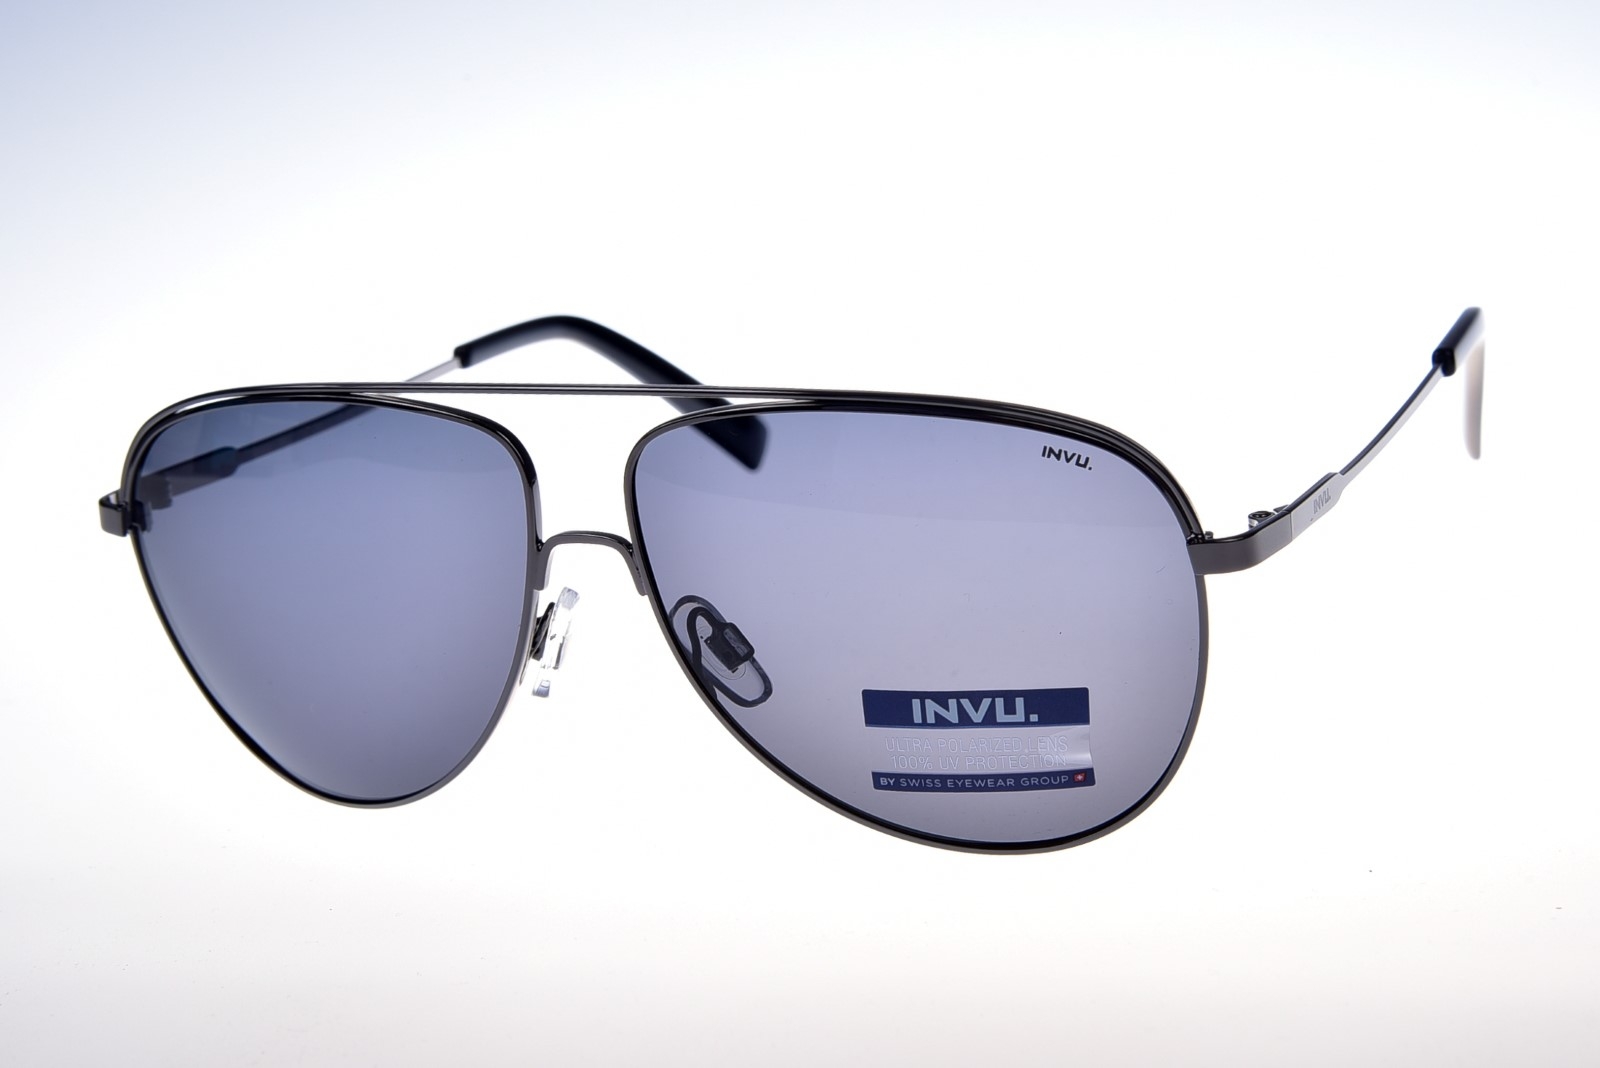 INVU. B1004B - Unisex slnečné okuliare